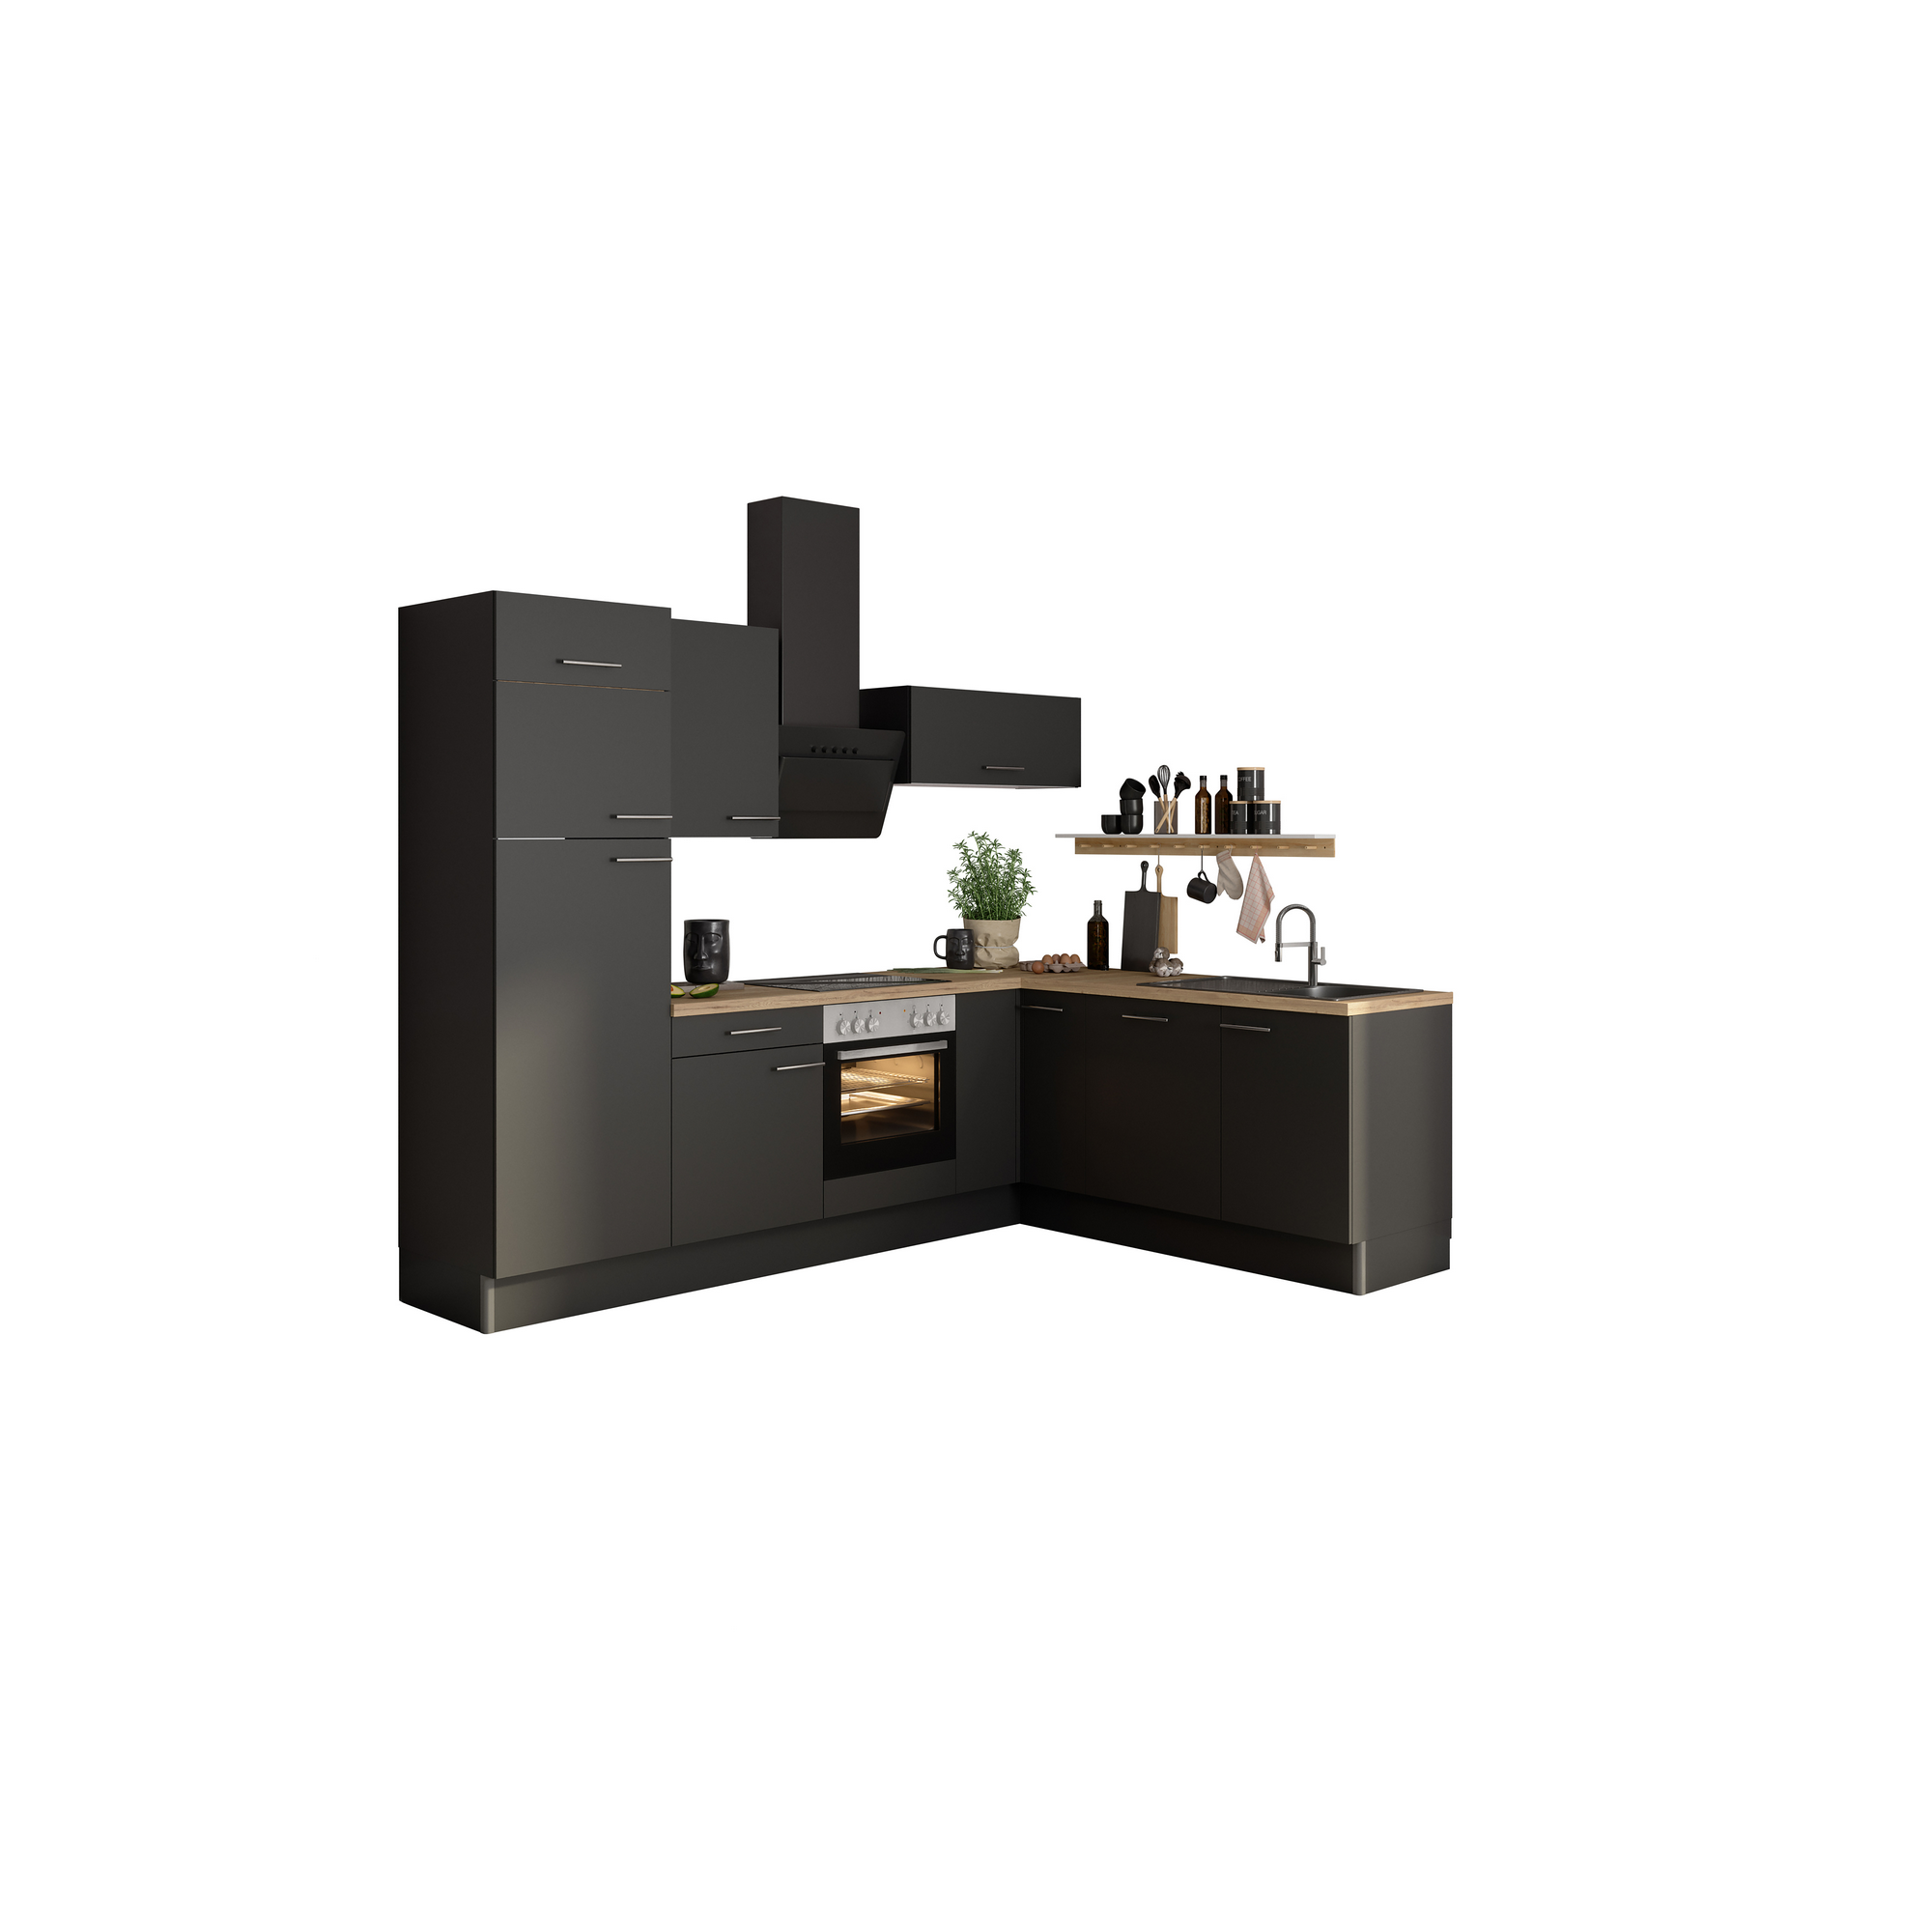 Winkelküche mit E-Geräten 'OPTIkoncept Ingvar420' anthrazit matt 270 cm + product picture